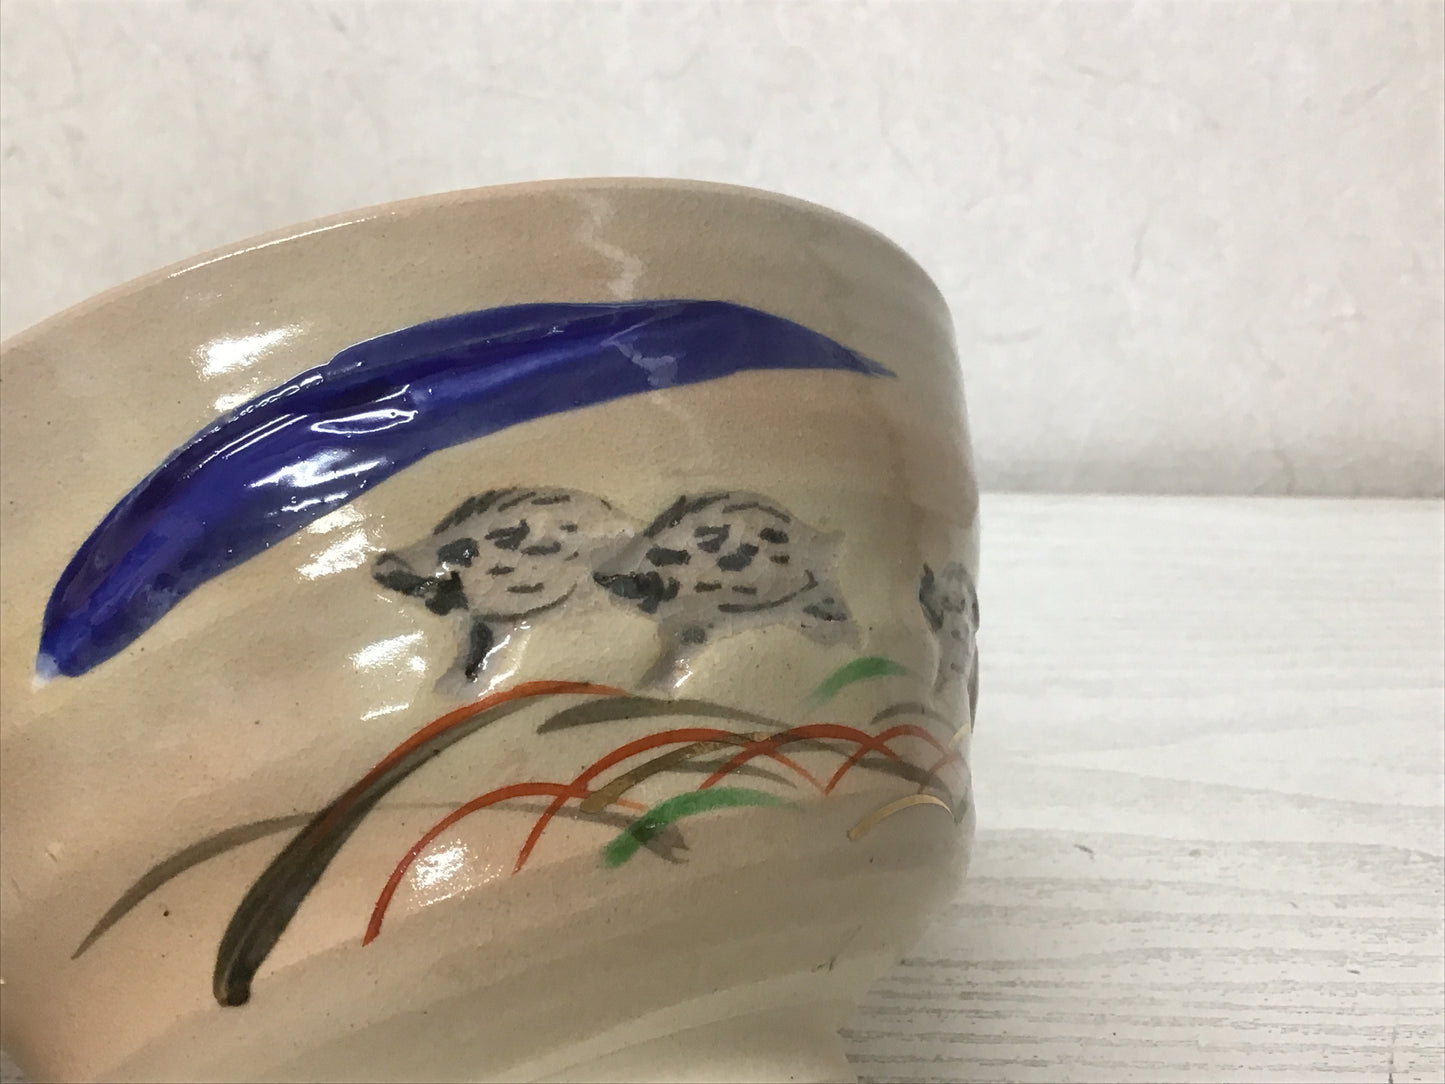 Y1424 CHAWAN Kyo-ware box Japanese bowl pottery Japan tea ceremony antique